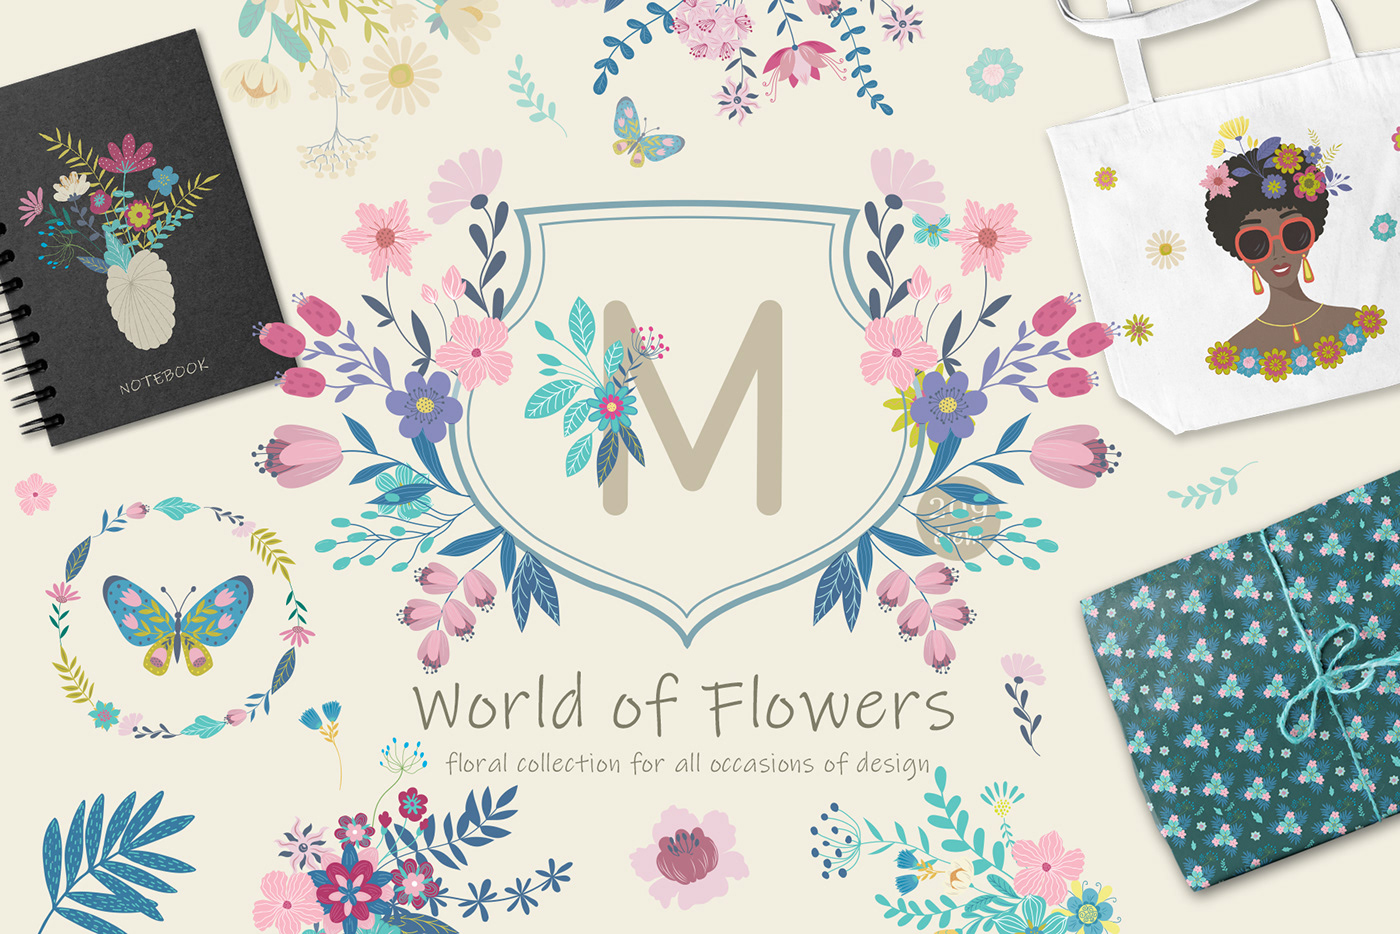 209 design elements, flowers, butterflies, floral alphabet, wreaths, women head fashional design
